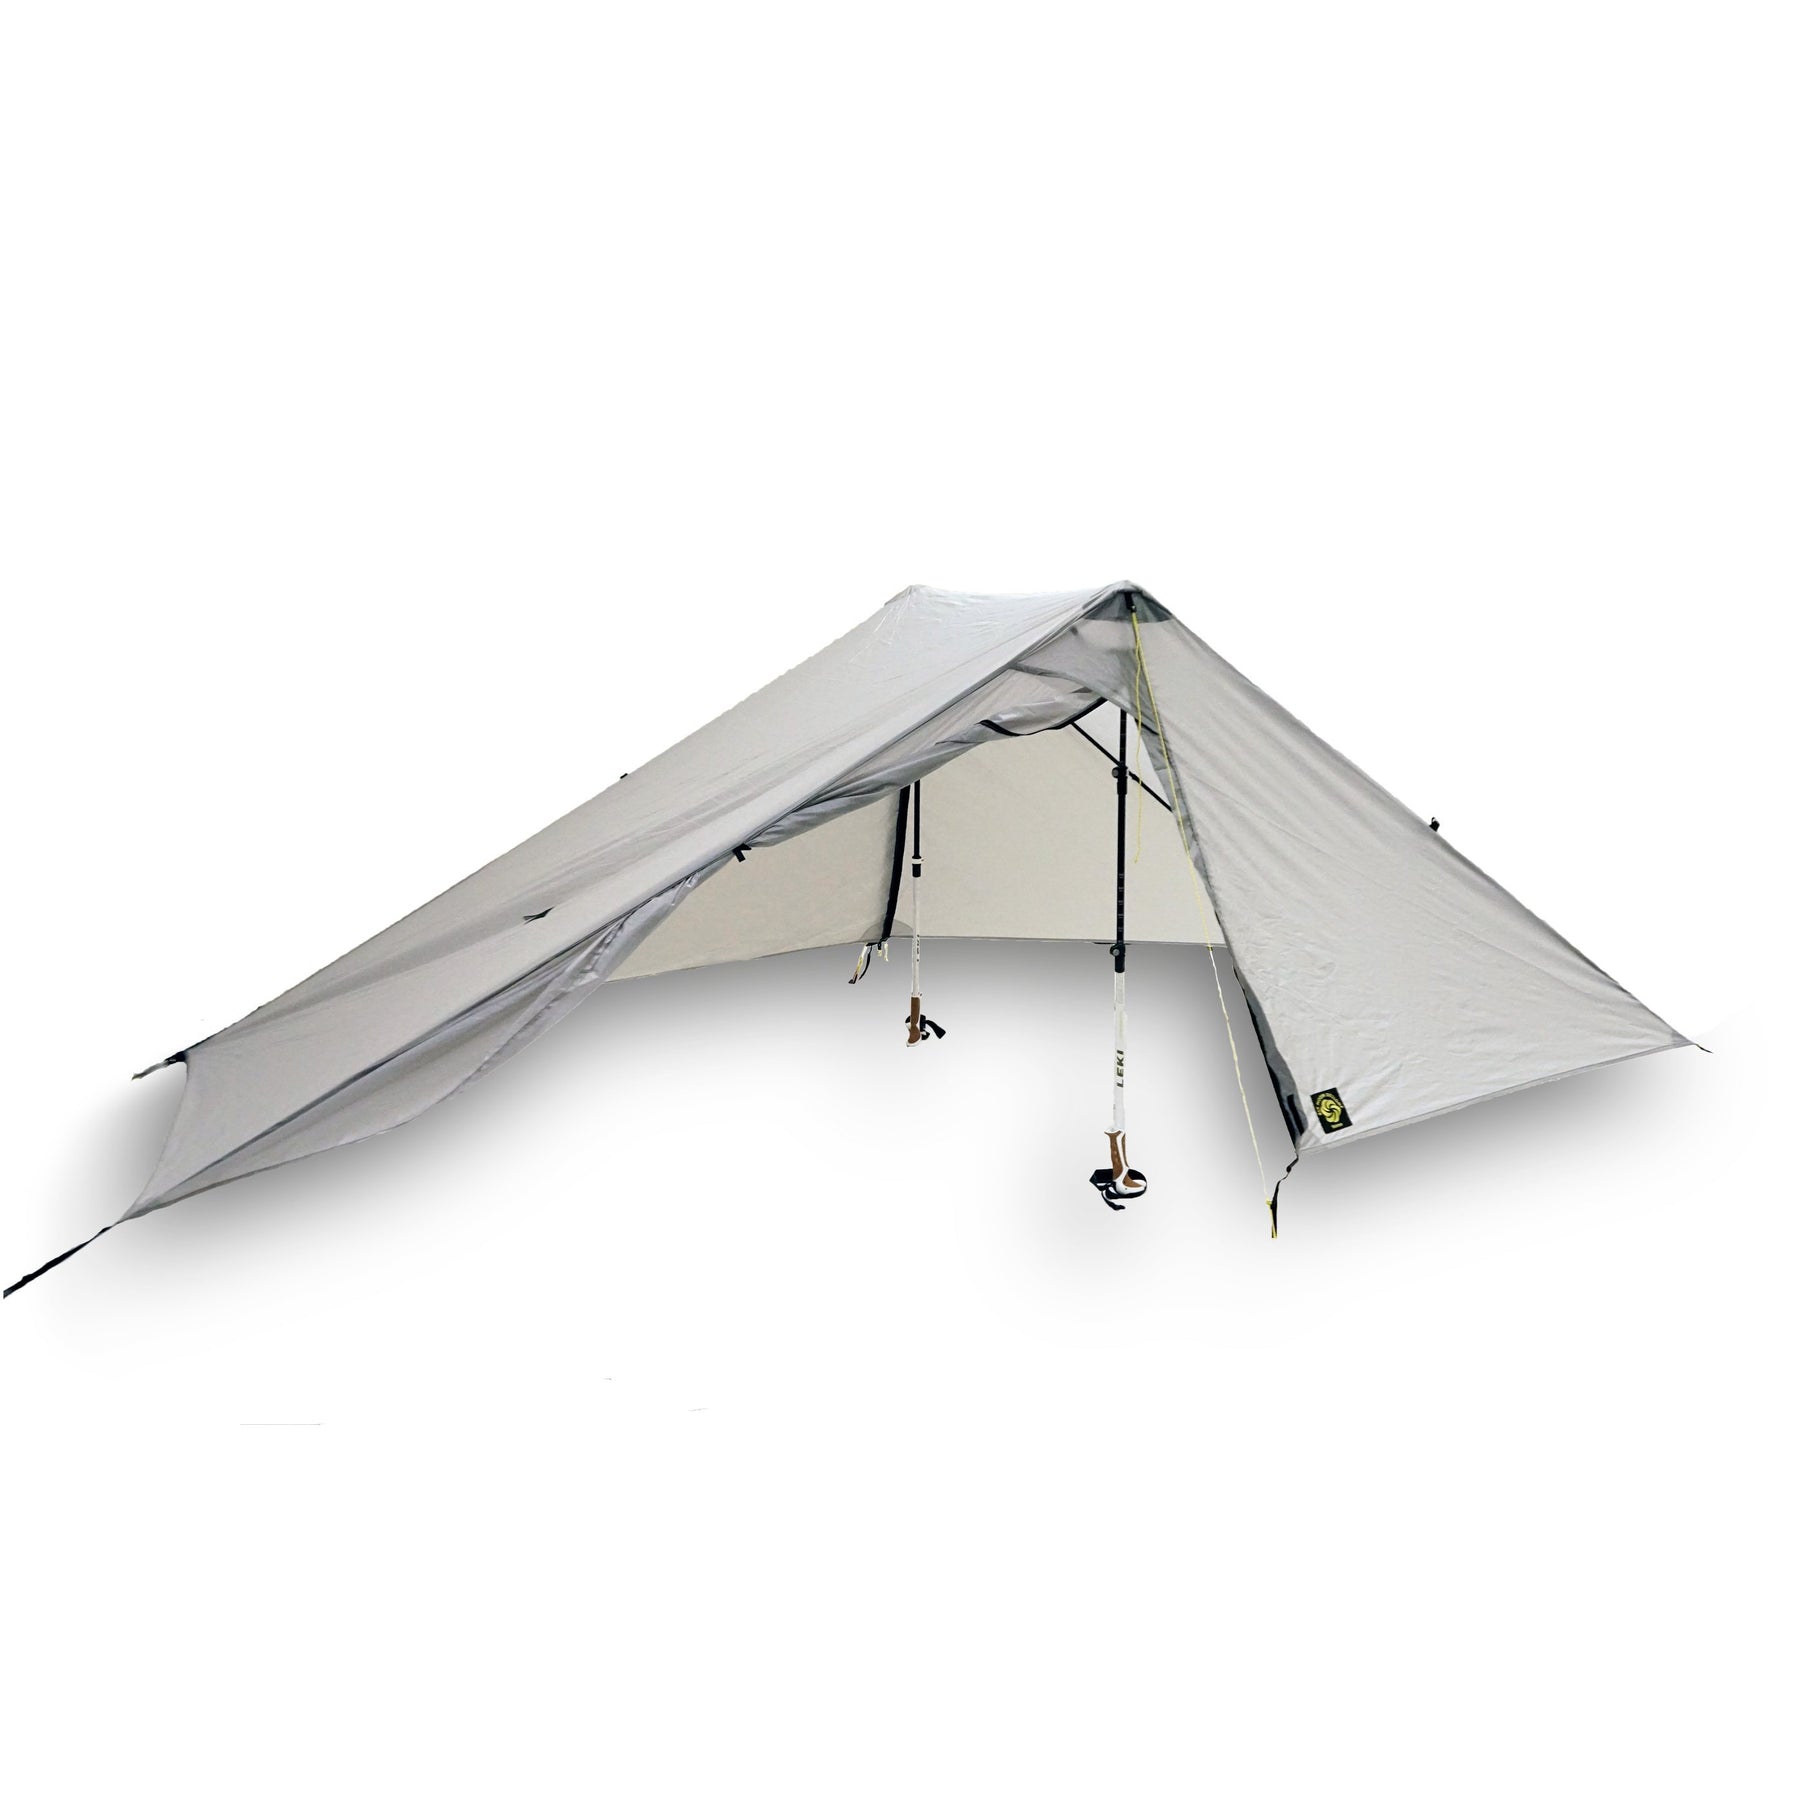 Six Moon Designs The Haven Ultralight Tent